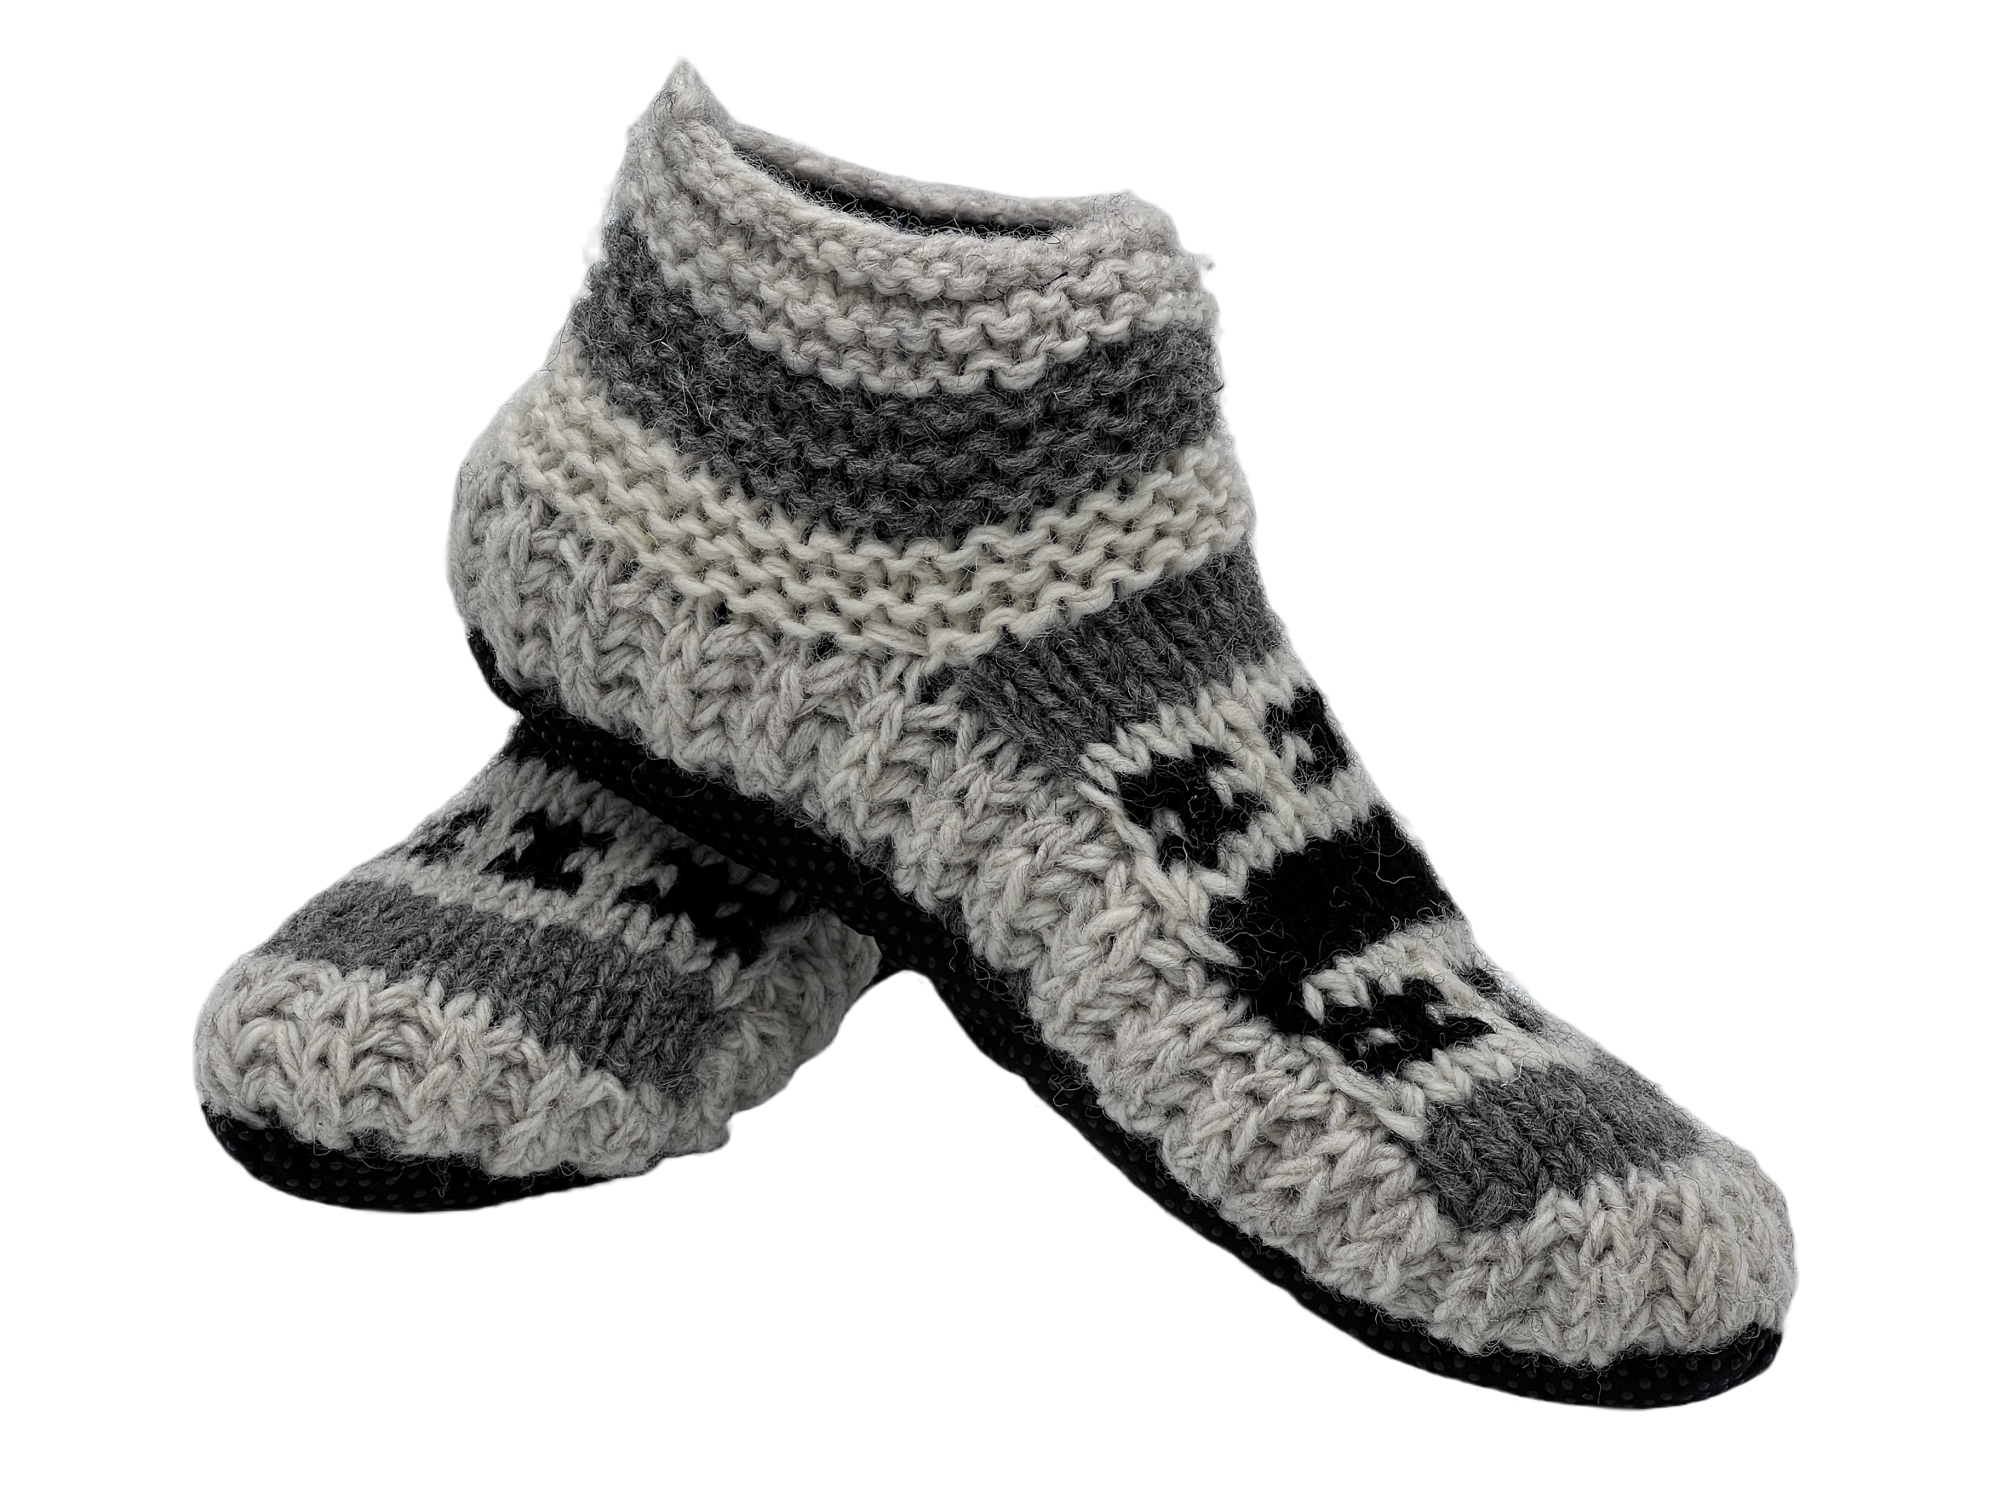 Fun socks | Fuzzy Non Slip Woolen Knitted Slipper Socks for Winters | Cozy Wool Slippers  | Cute| Ankle Length House Slippers for Men & Women